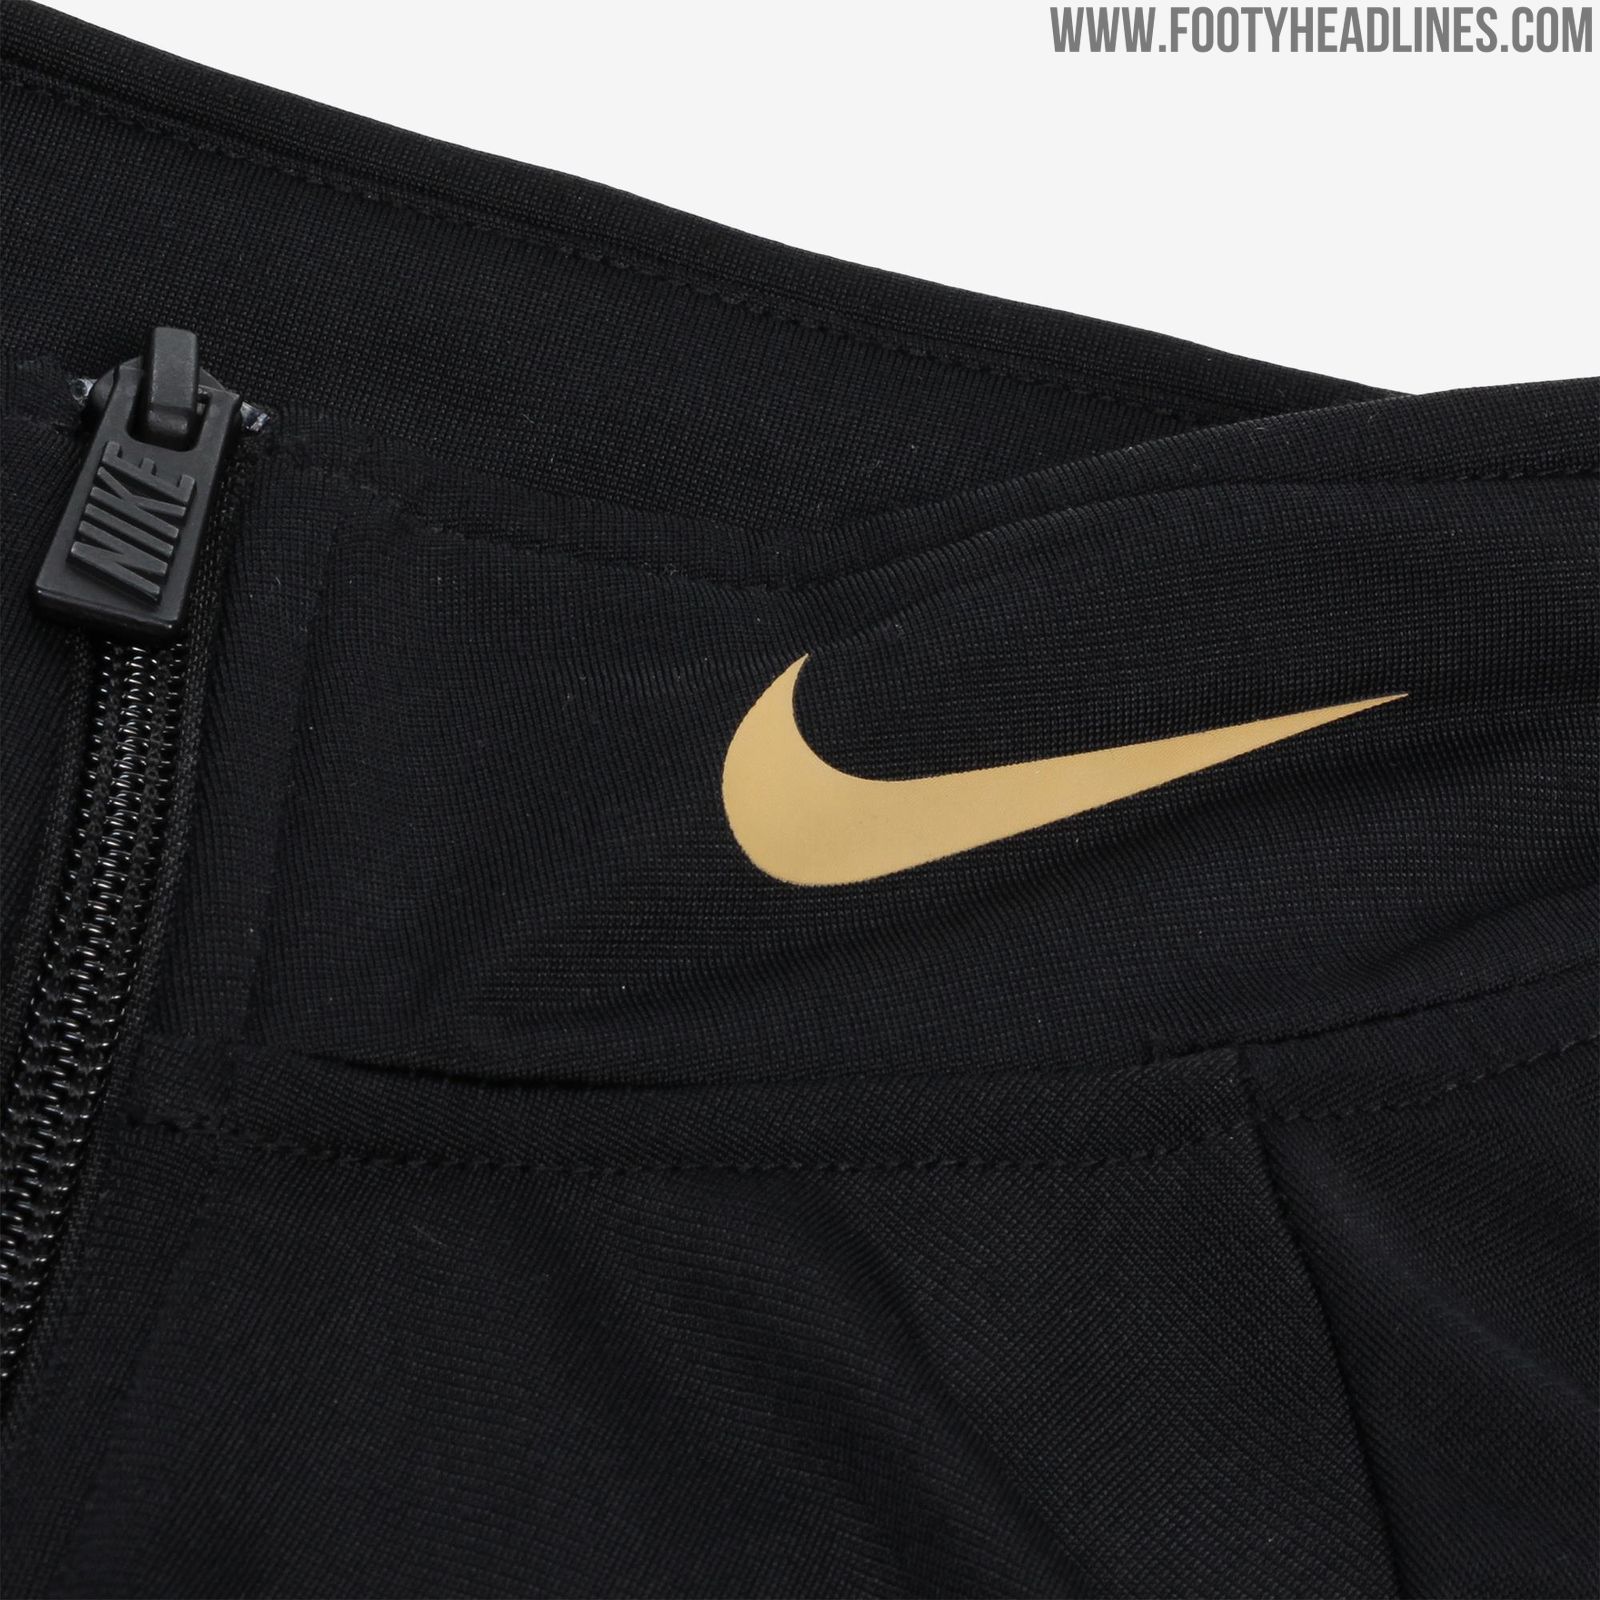 Stunning Nike Corinthians x Senna N98 Jacket Released - Footy Headlines